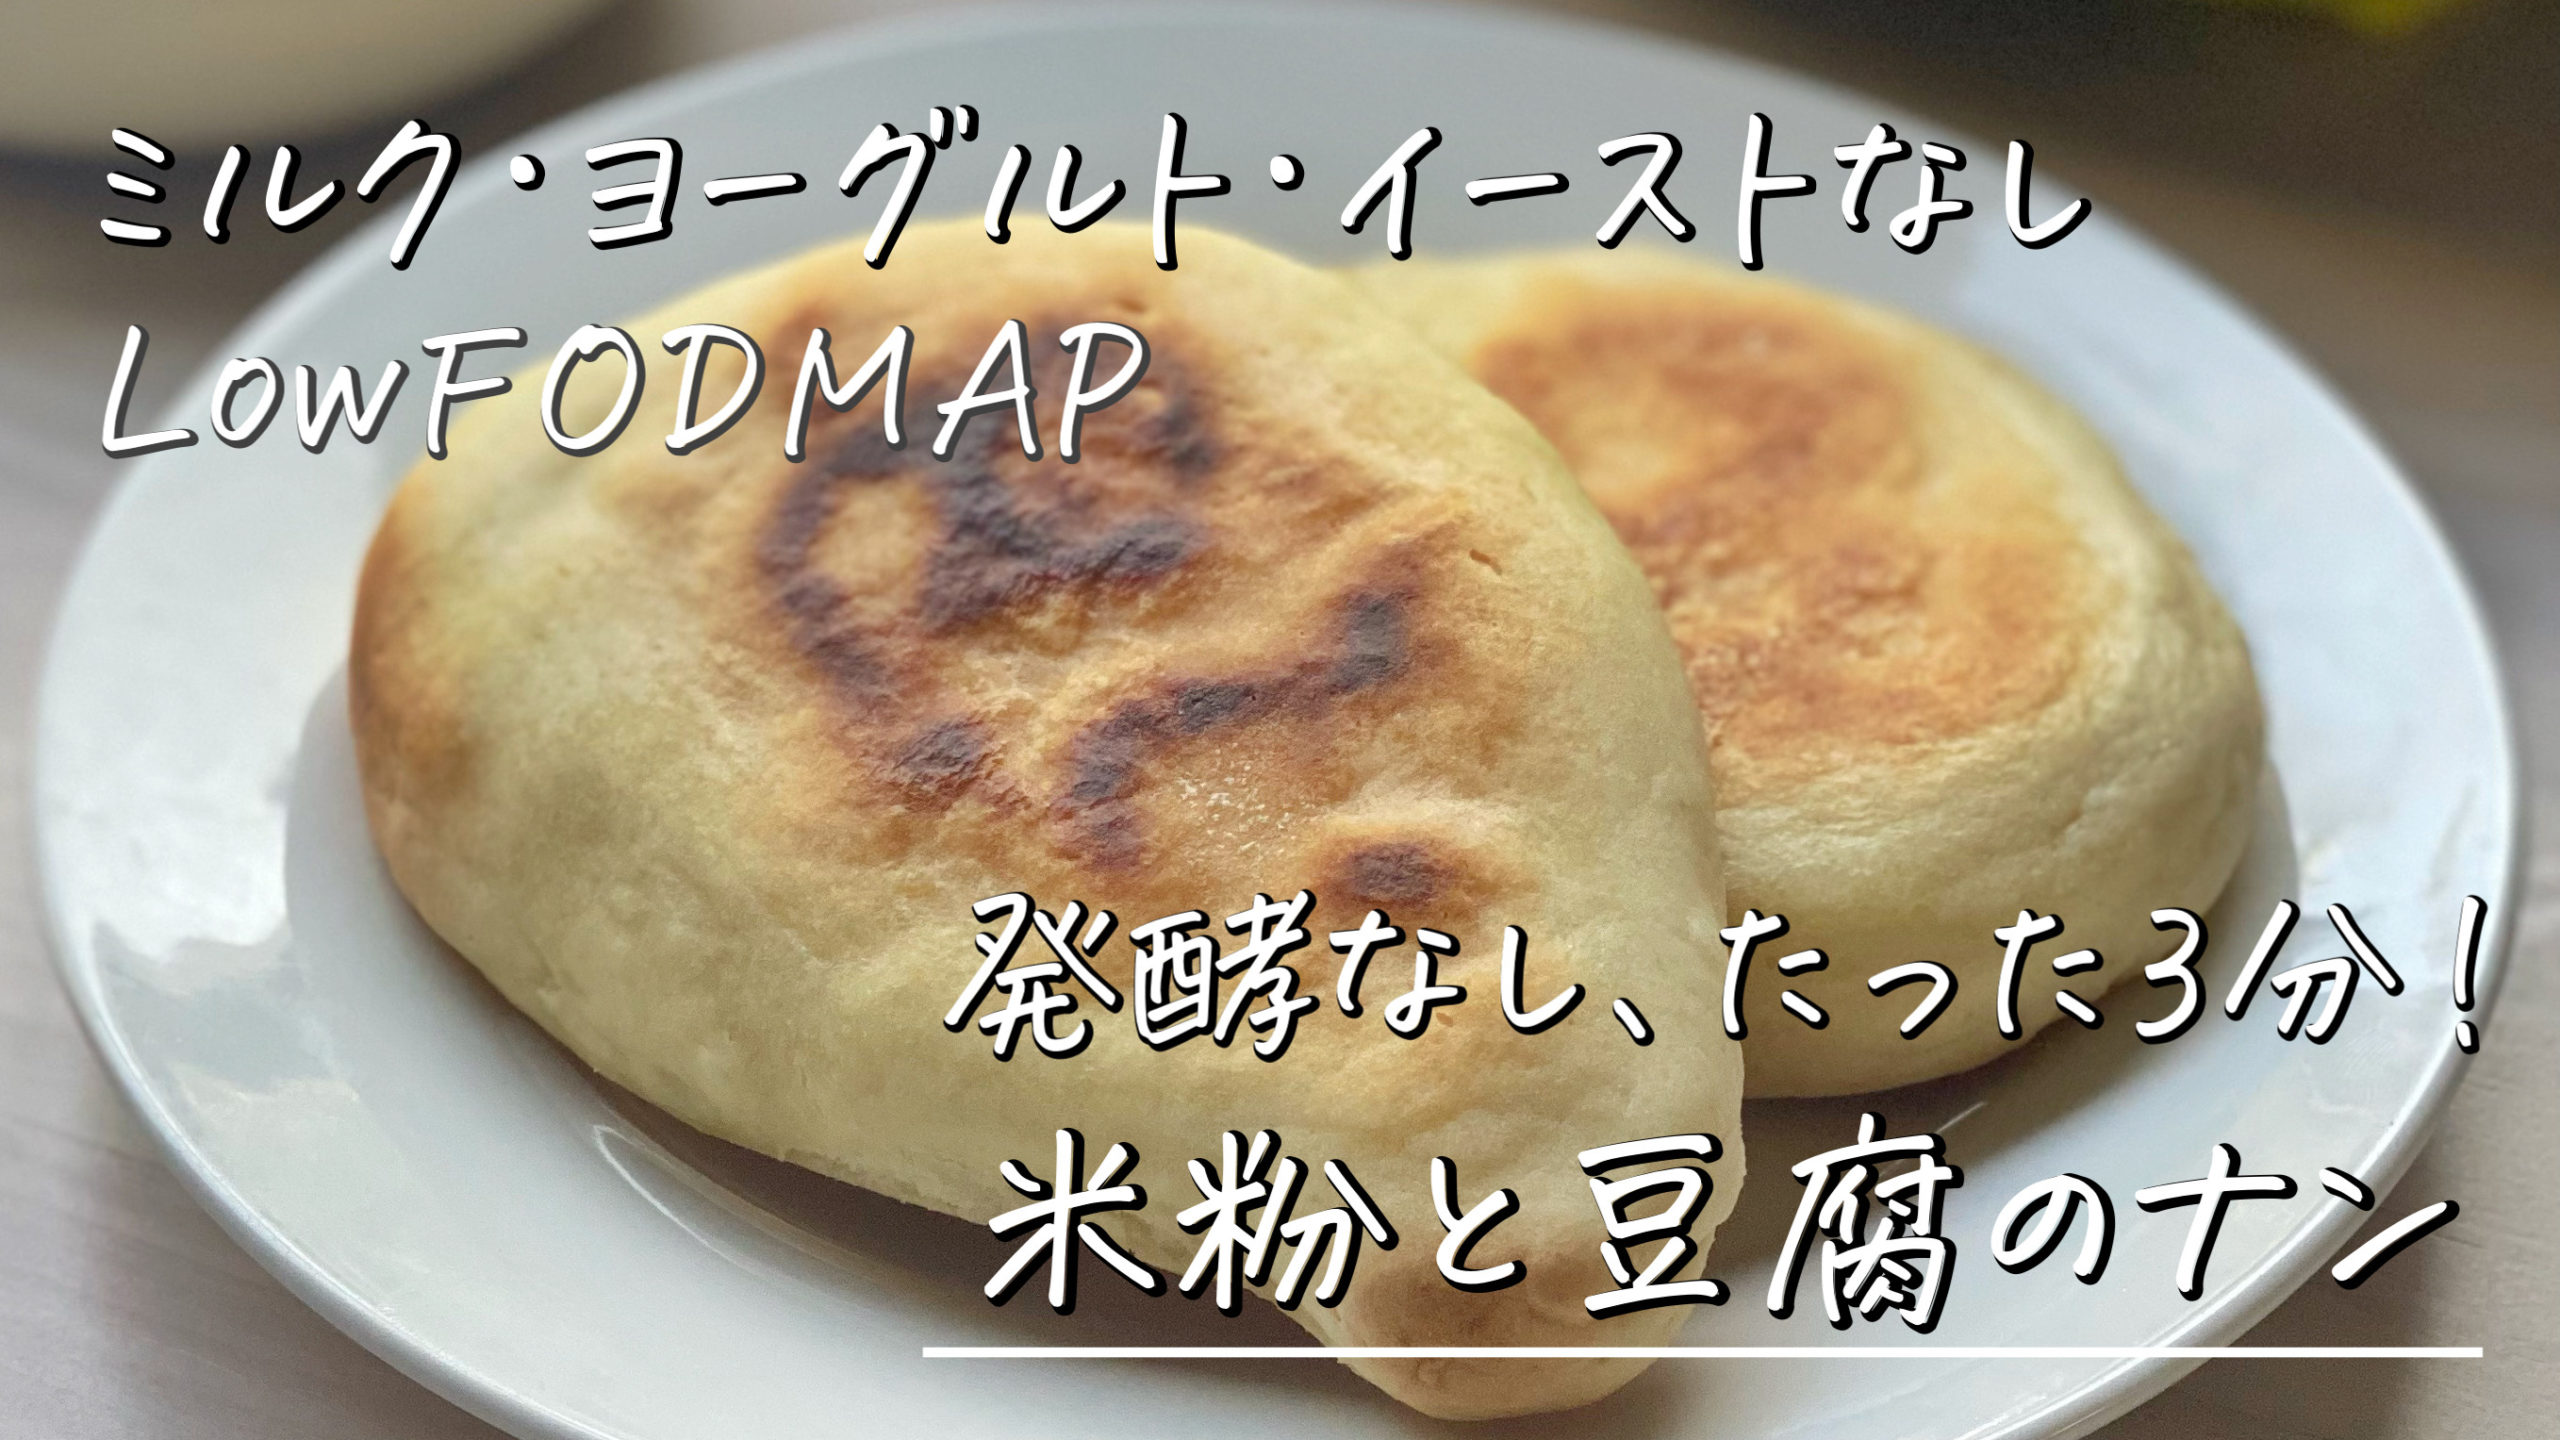 low-fodmap-recipe-of-naan-made-of-rice-flour-and-tofu